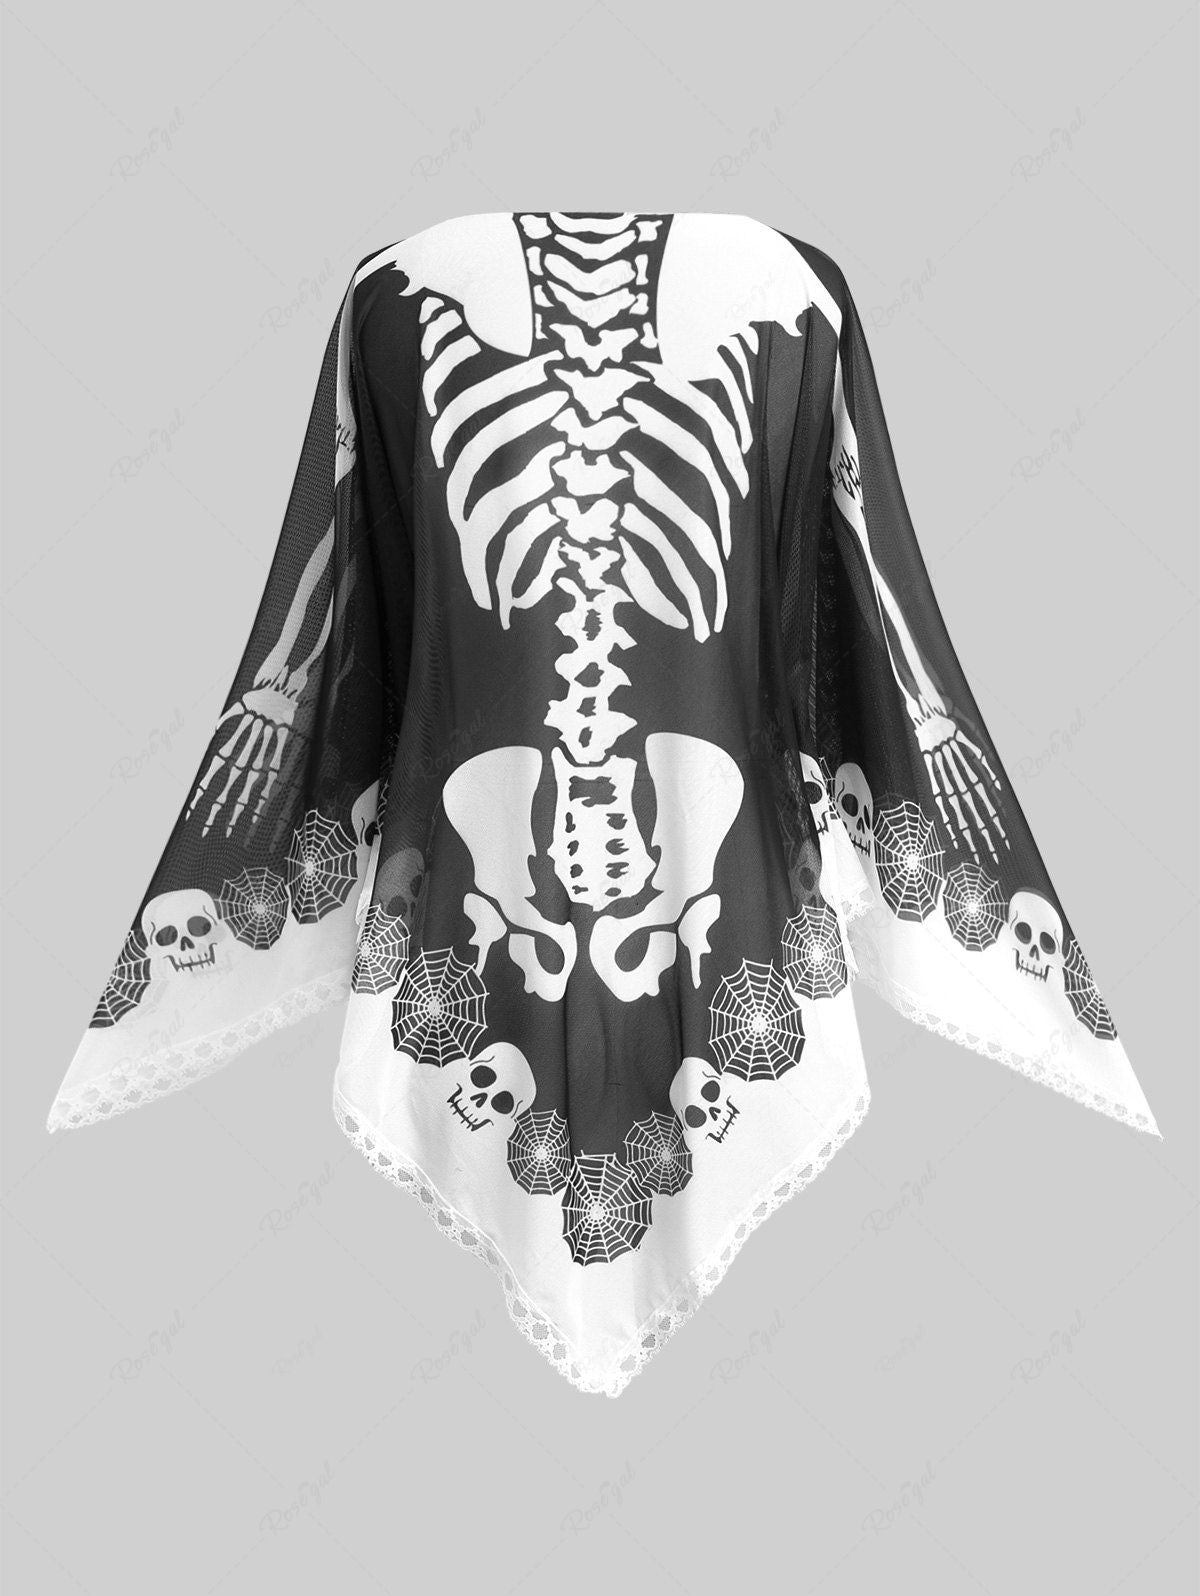 Halloween Skeleton Costume Poncho Shawl Skull Spider Web Print Handkerchief Cape